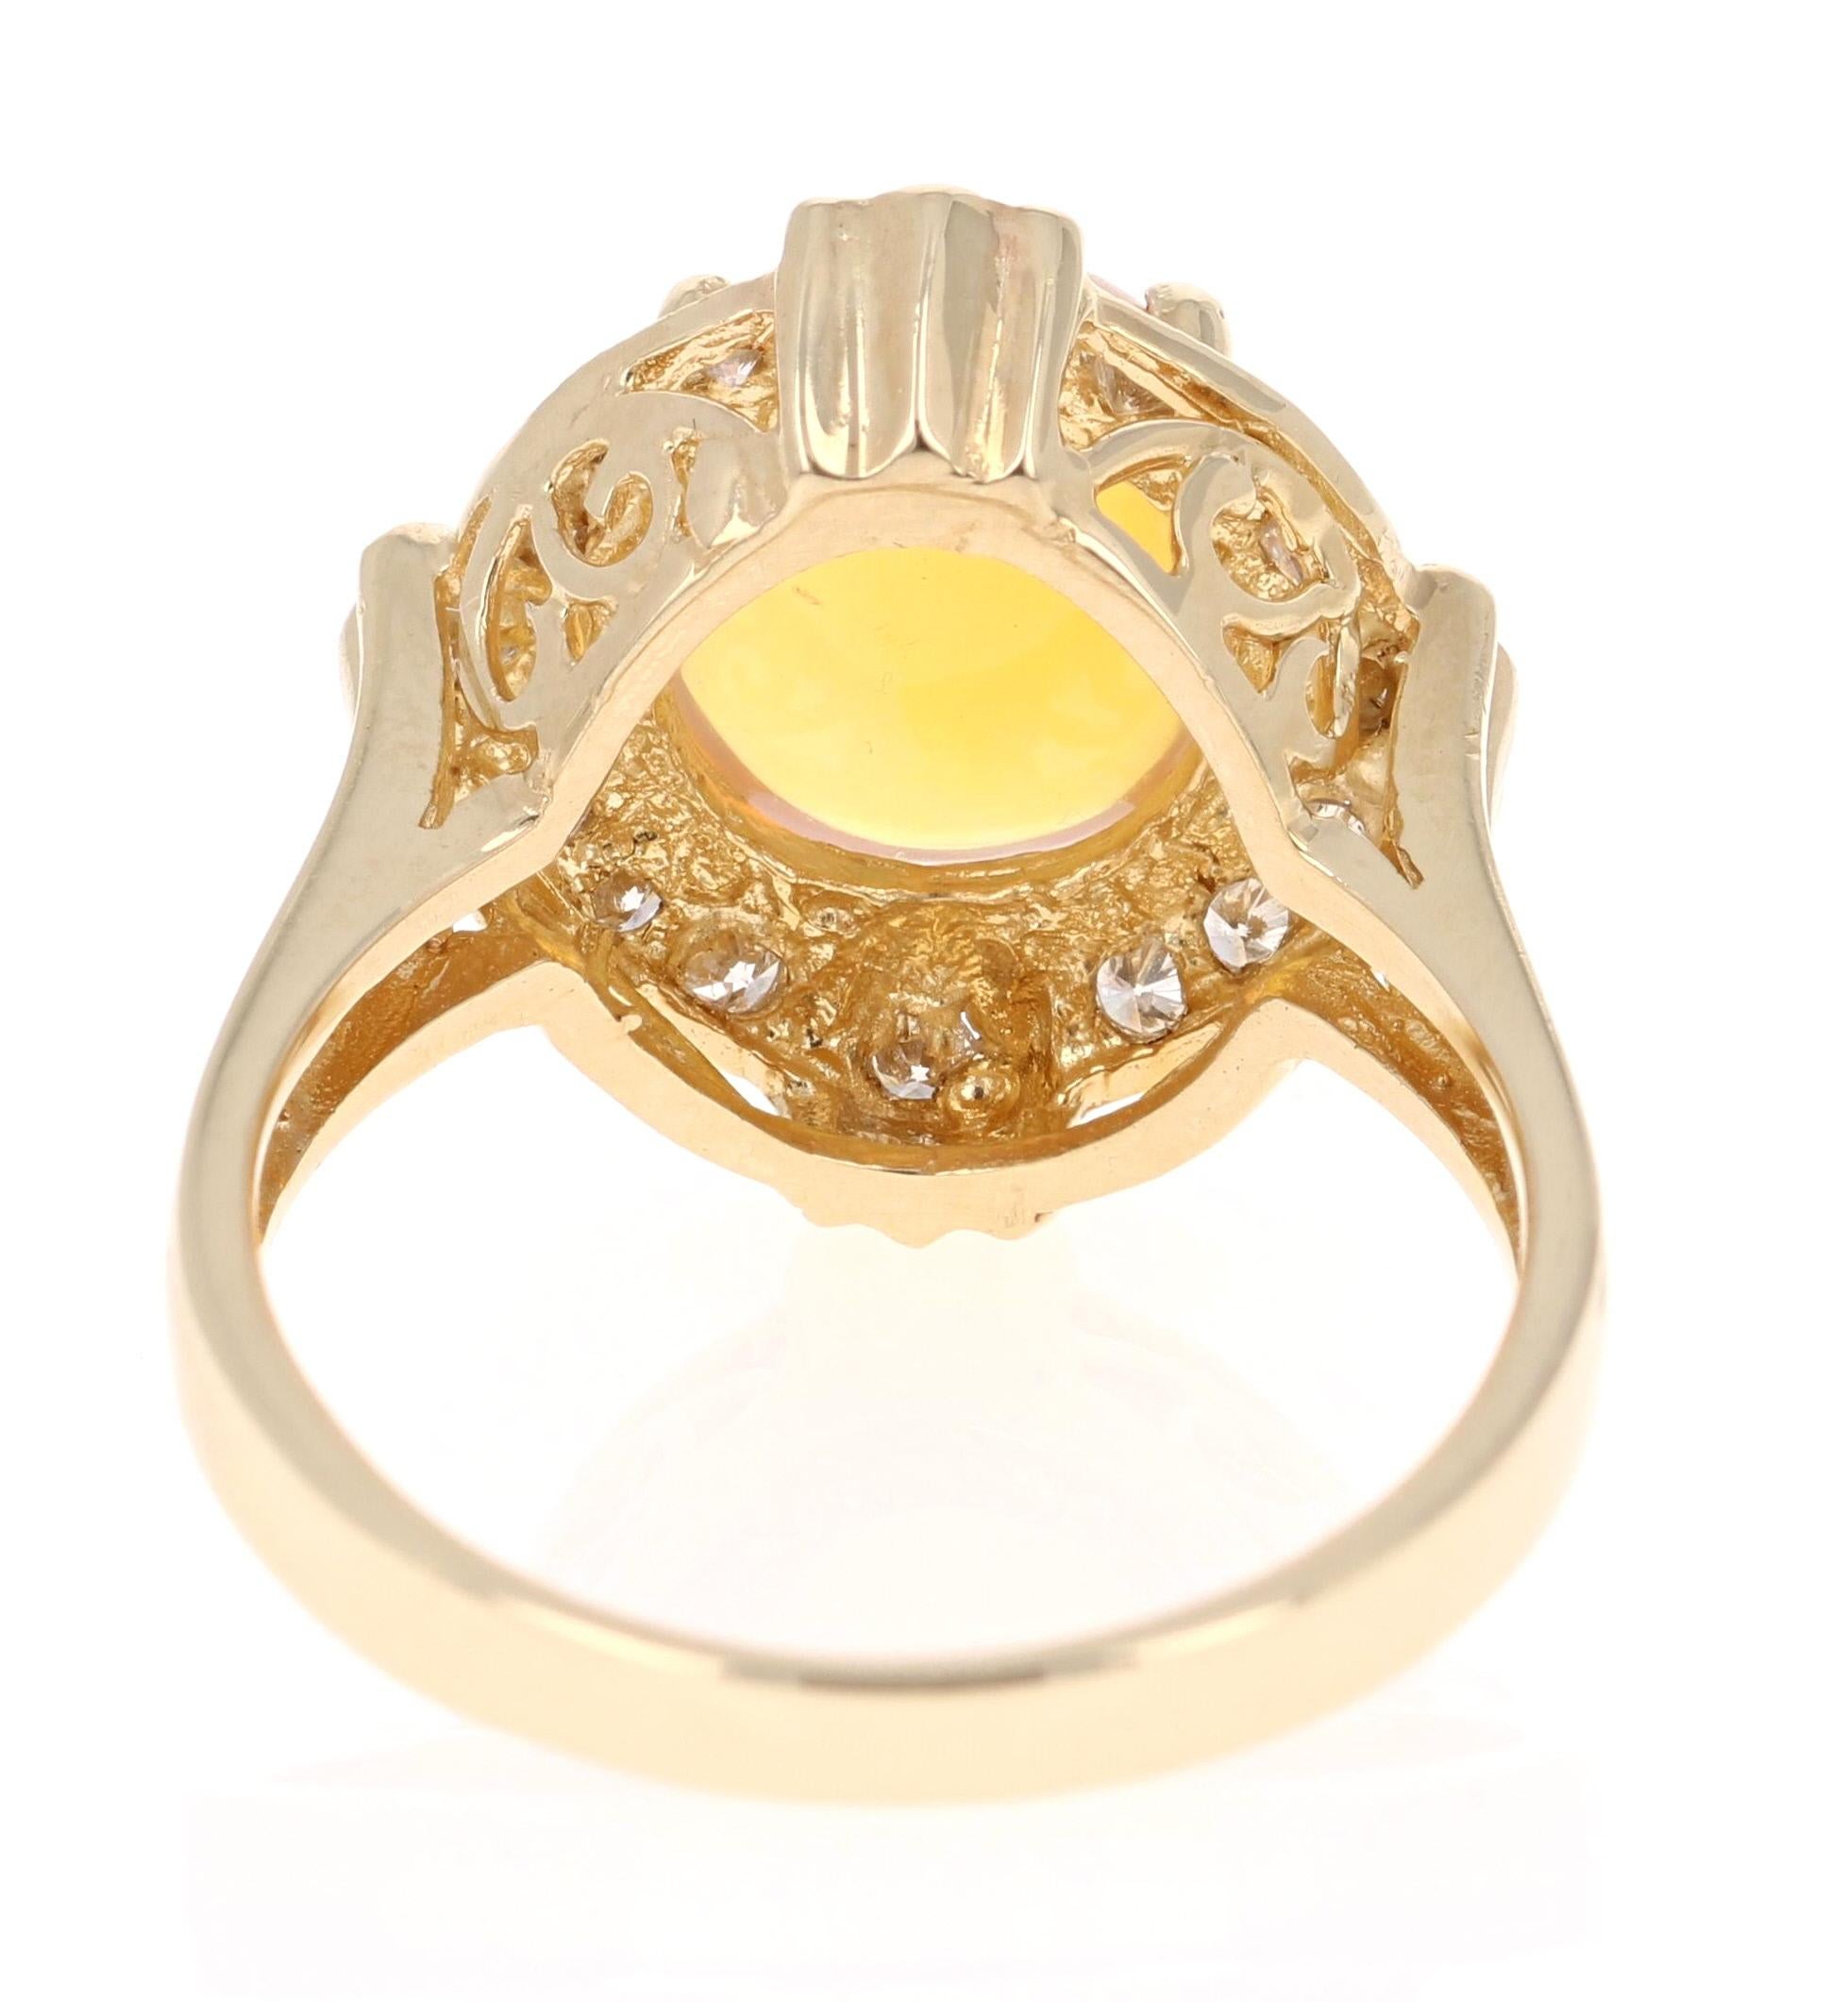 Oval Cut 2.92 Carat Opal Diamond 14 Karat Yellow Gold Ring For Sale